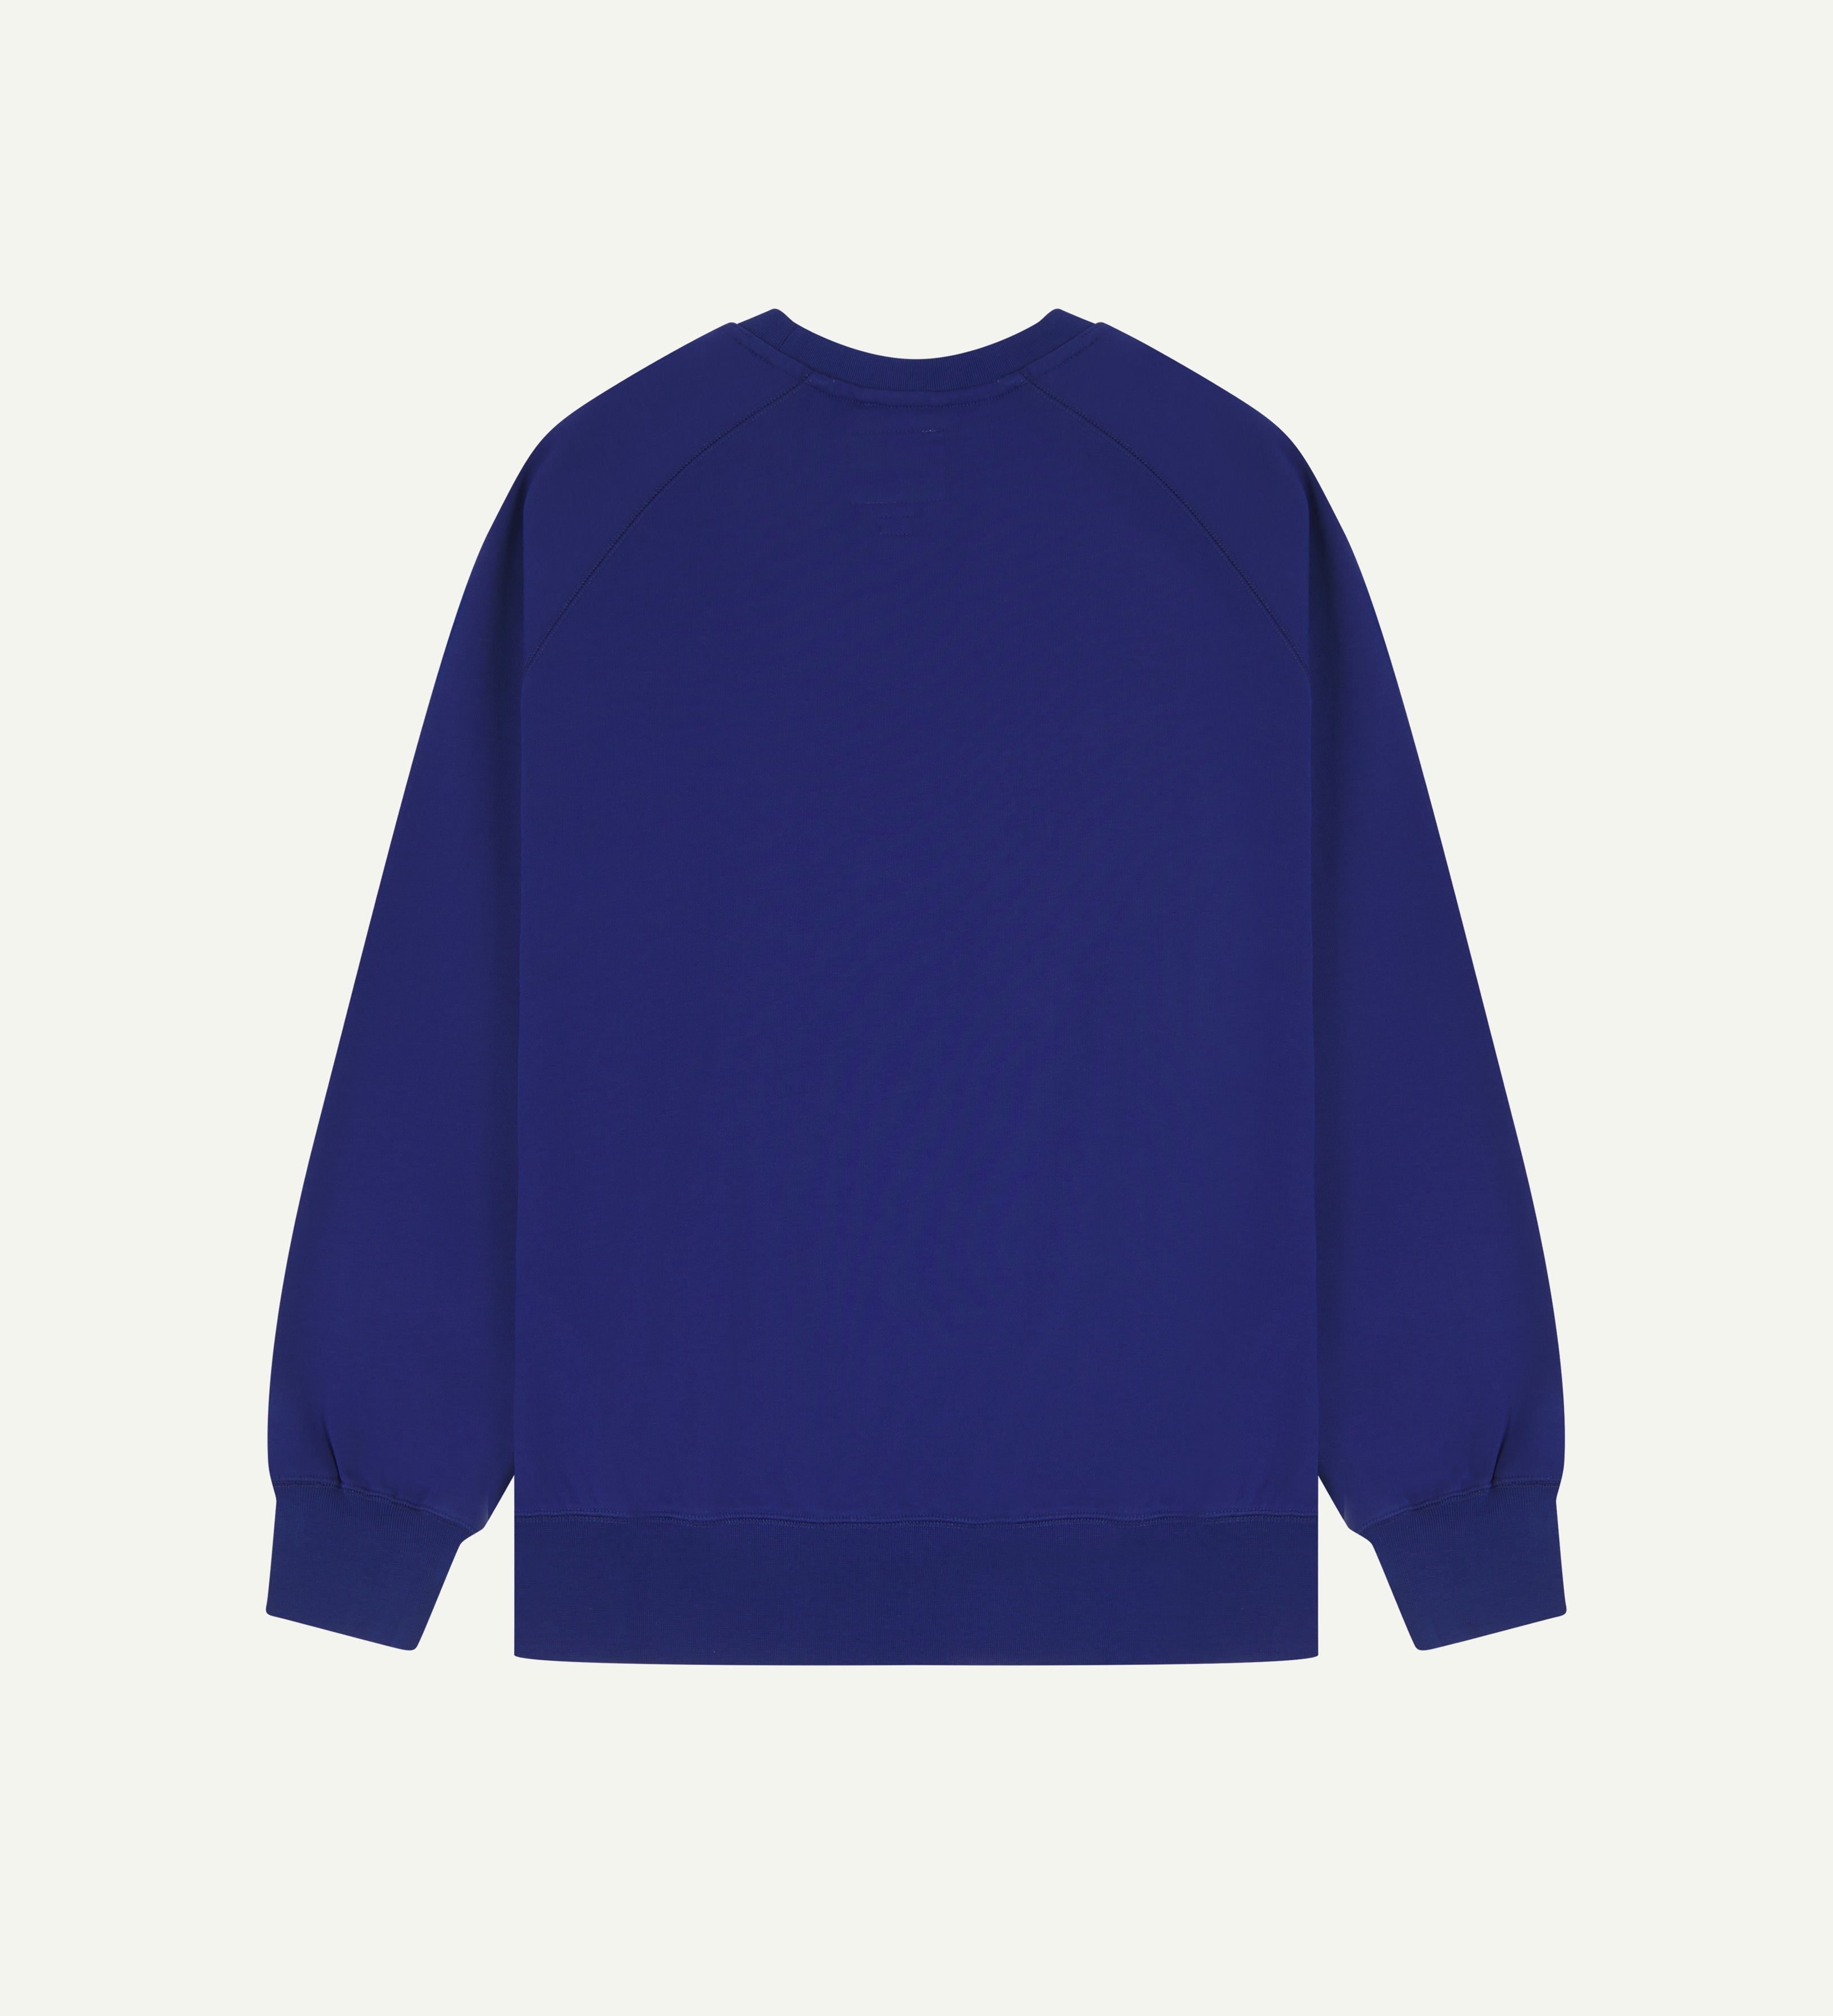 Back view of bright blue men's organic heavyweight cotton #7005 sweatshirt